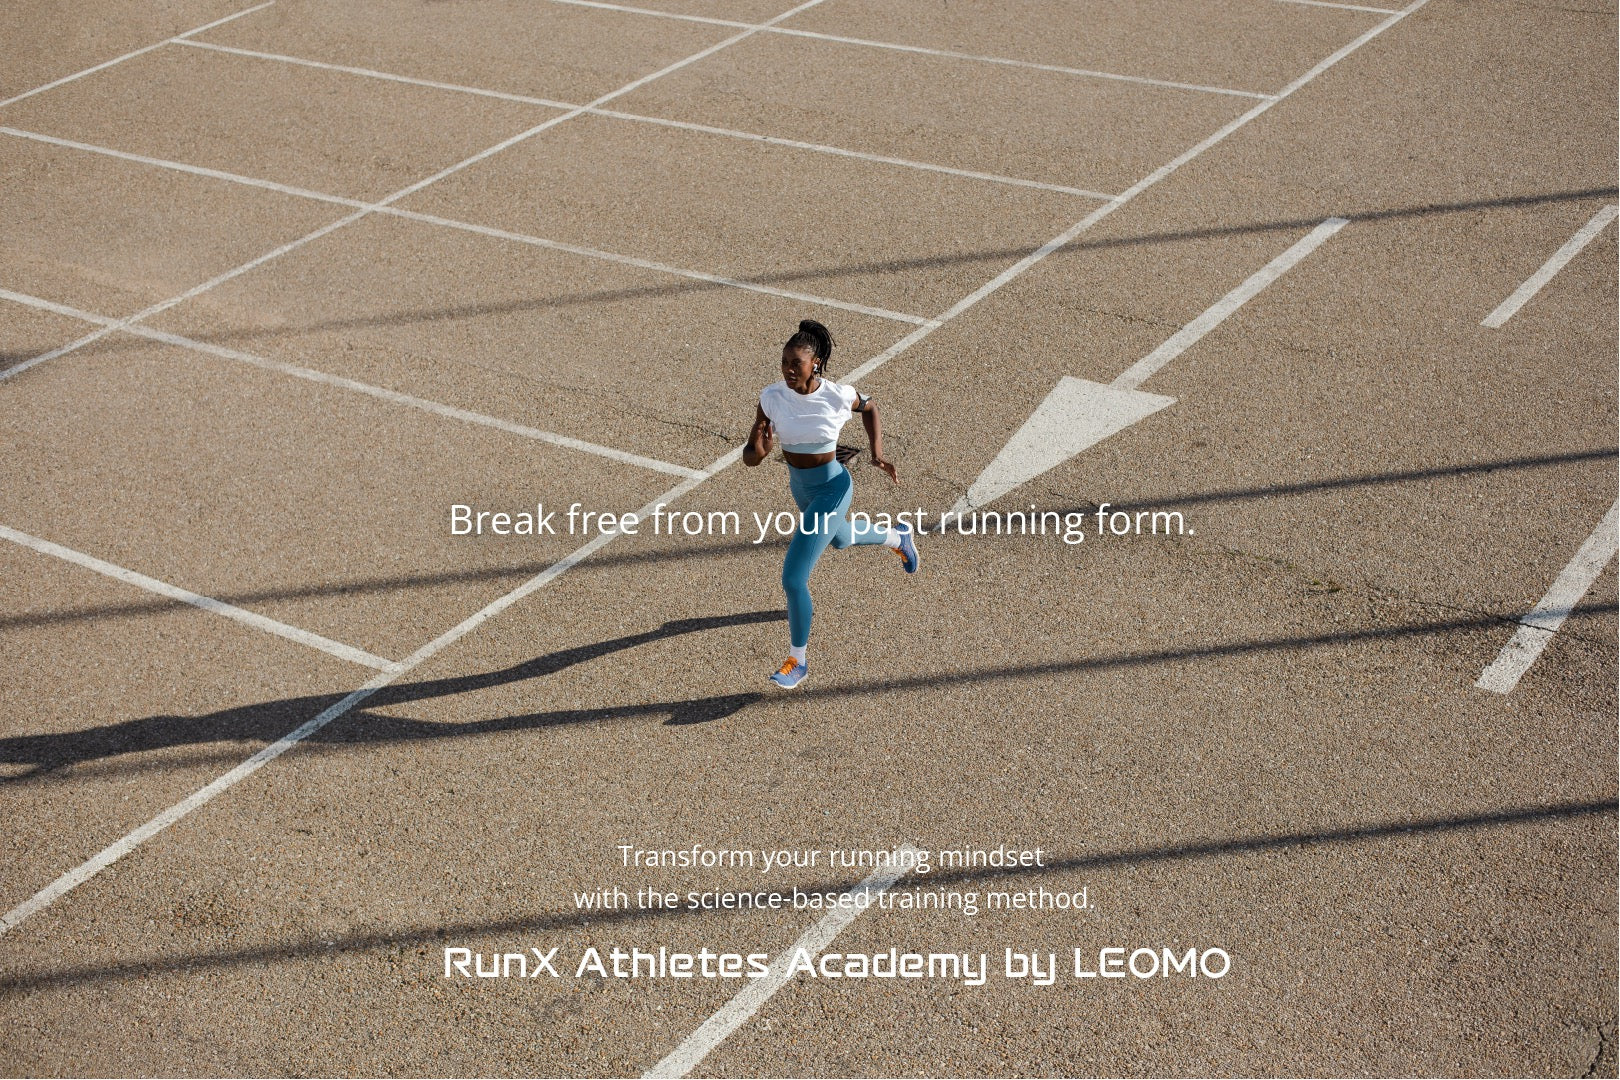 RunX Athletes Academy